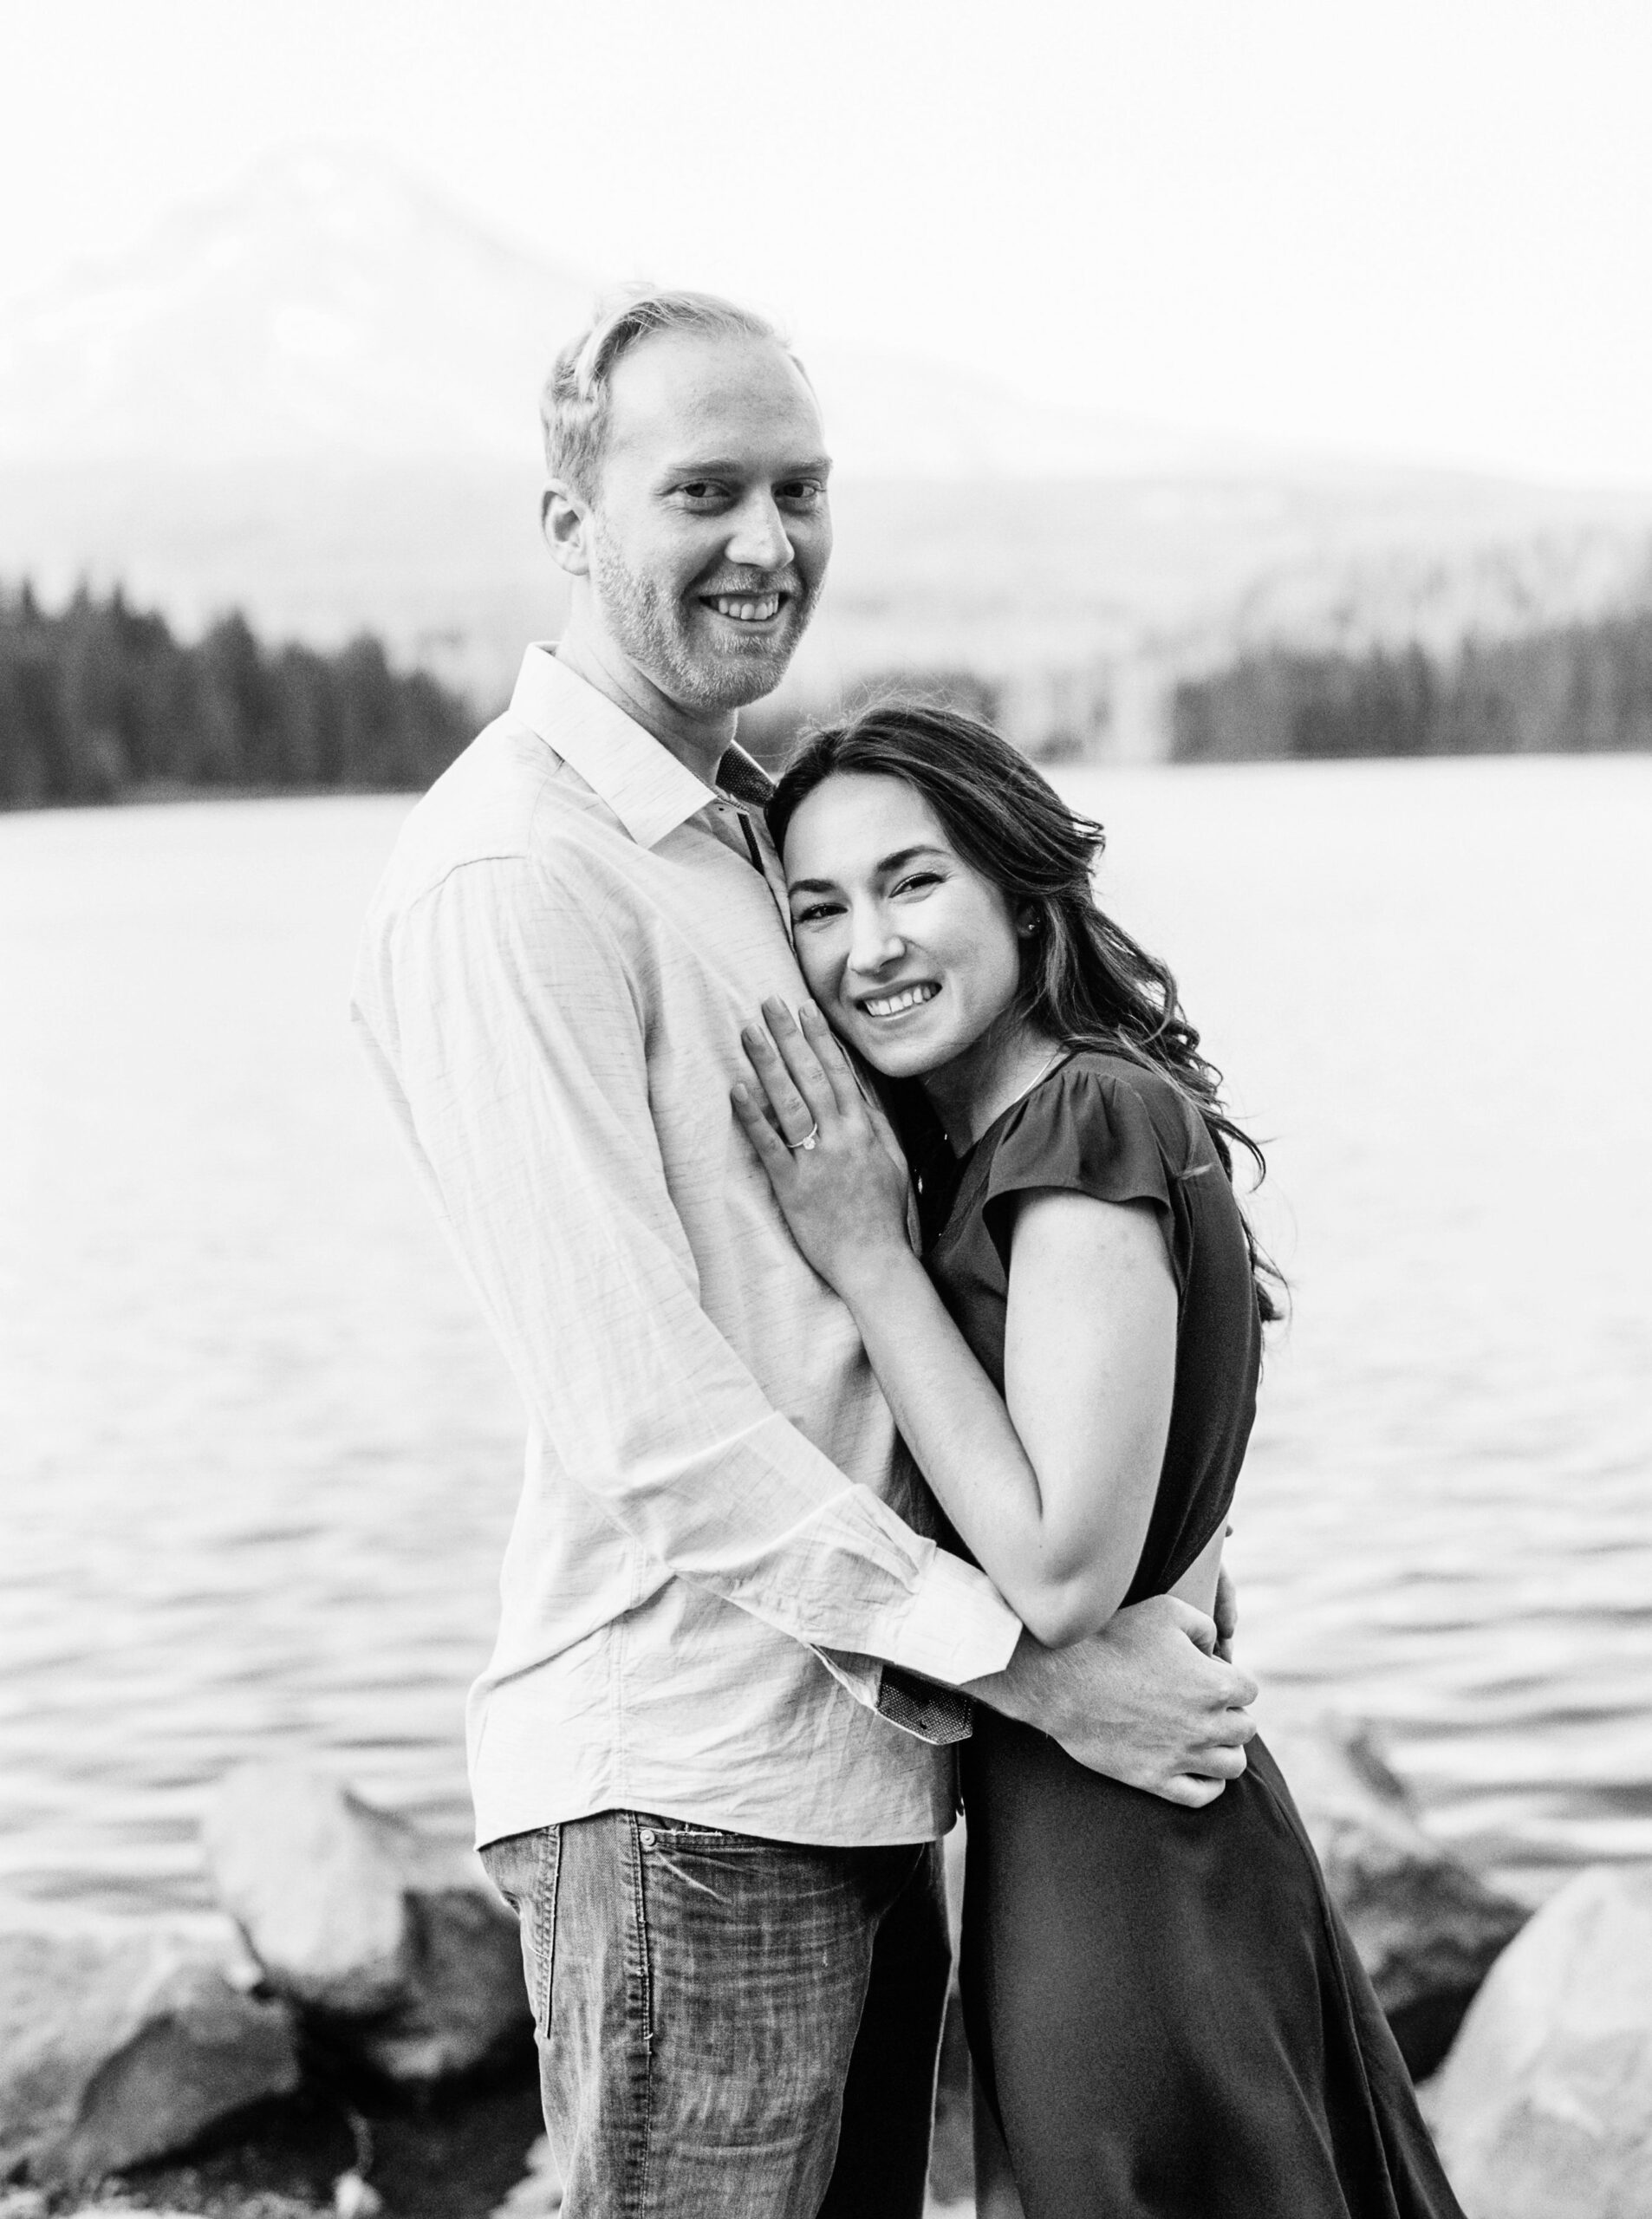 Trillium Lake - Oregon Wedding Photographer